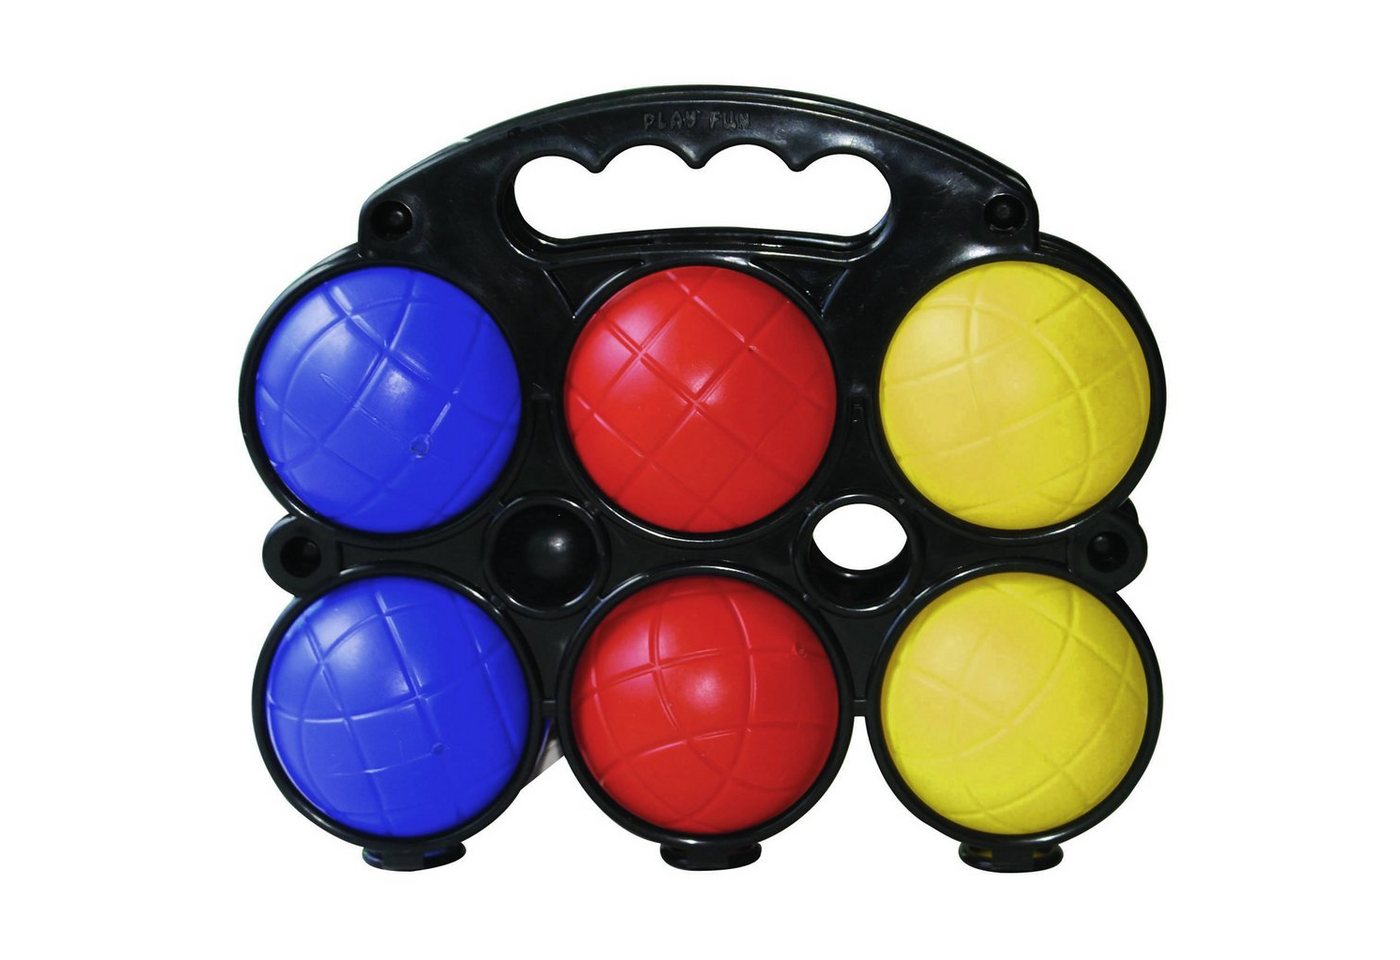 L.A. Sports Spielzeug-Gartenset Boule-Set Boccia Spiel-Set Bälle 3 Farben rot gelb blau mit Zielkugel, (Spiel-Set, 6 Bälle, 1 Zielkugel), mit Tragehalter von L.A. Sports